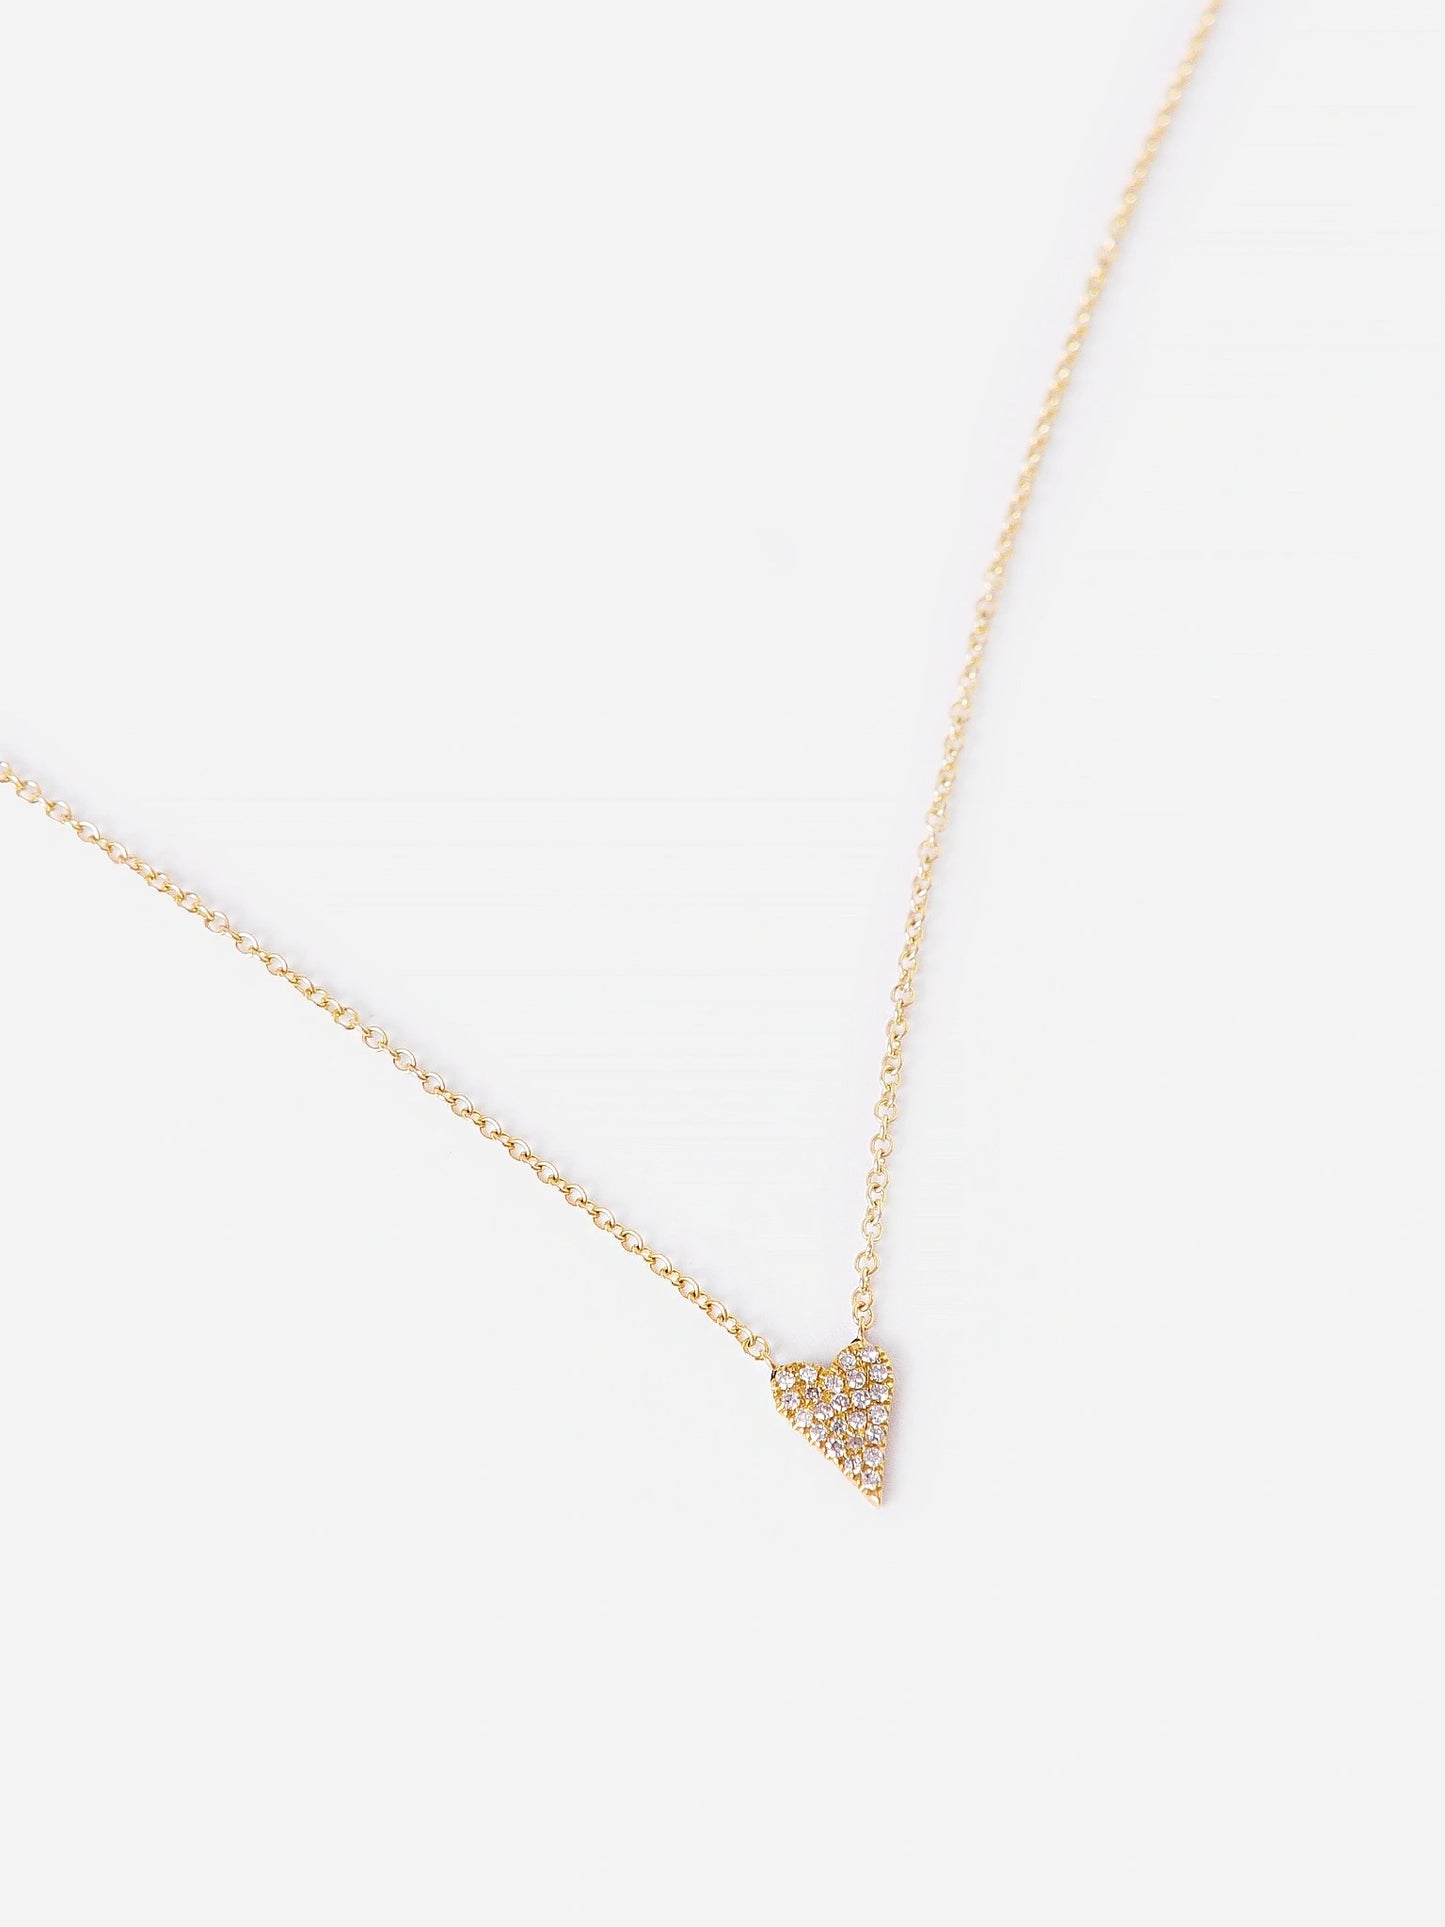 S. Bell Women's Mini Heart Diamond Necklace